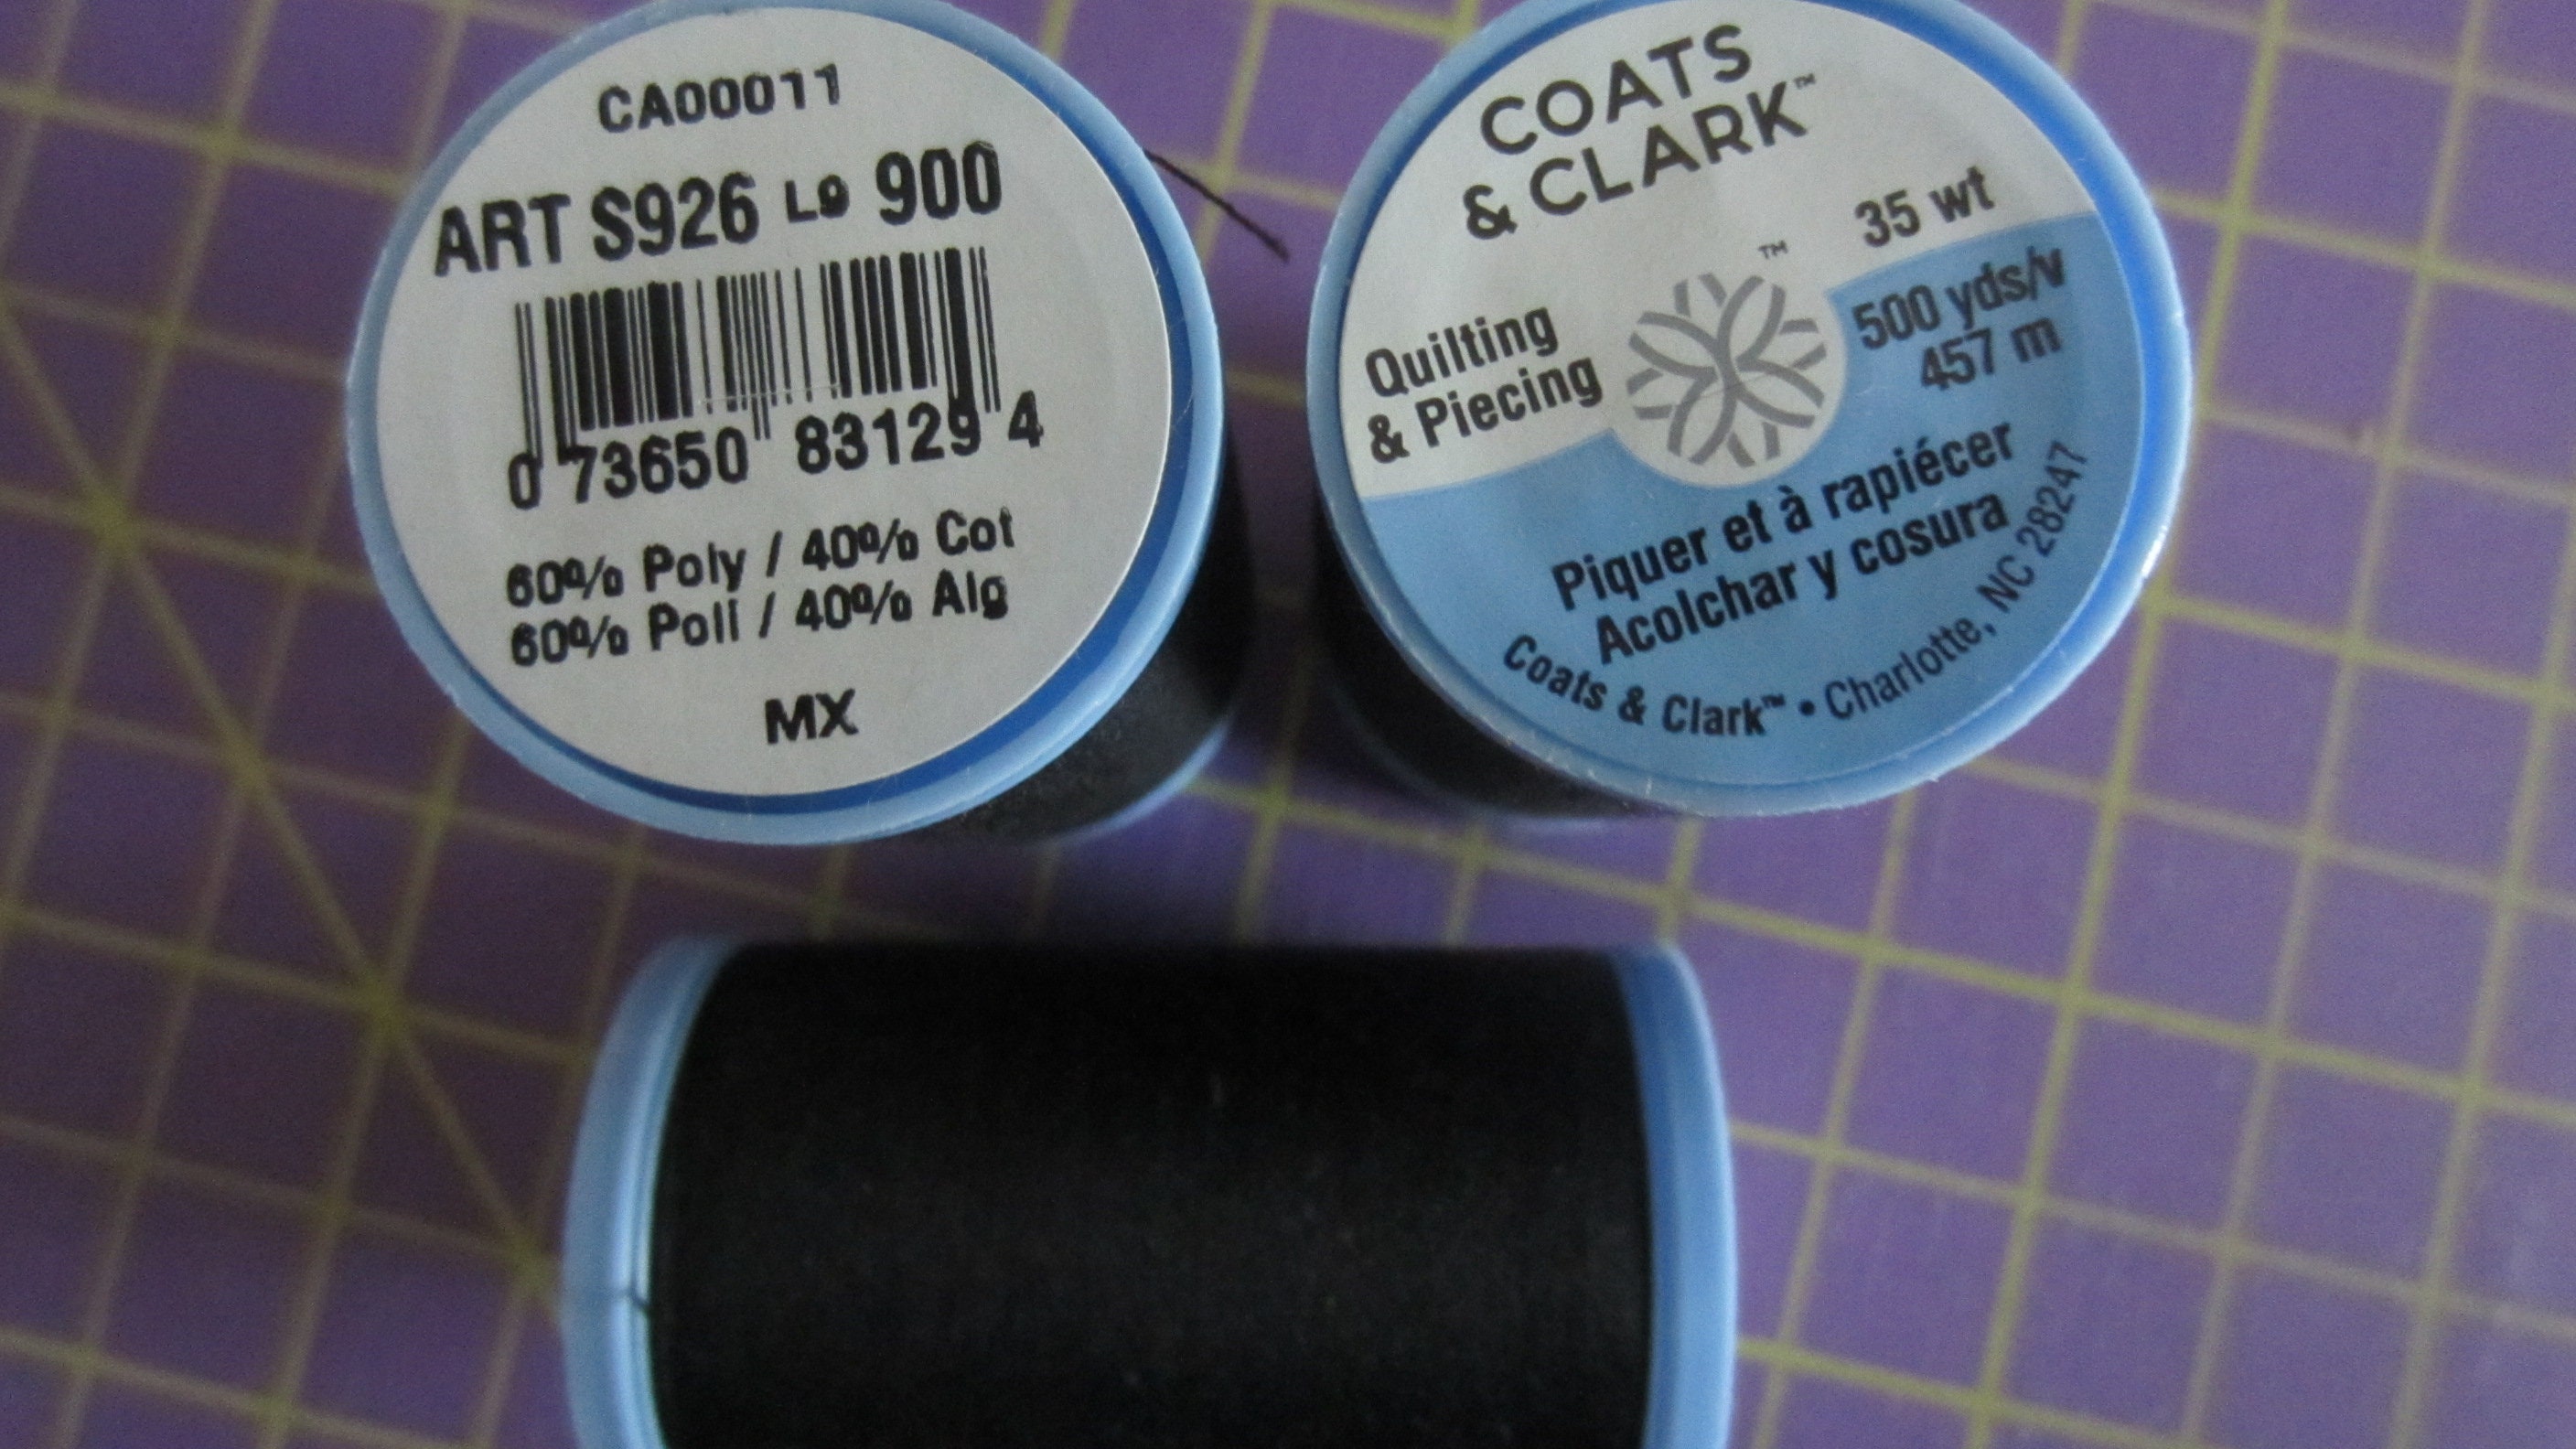 Neutral Colors - White, Black, Gray 250 yds Coats & Clark Dual